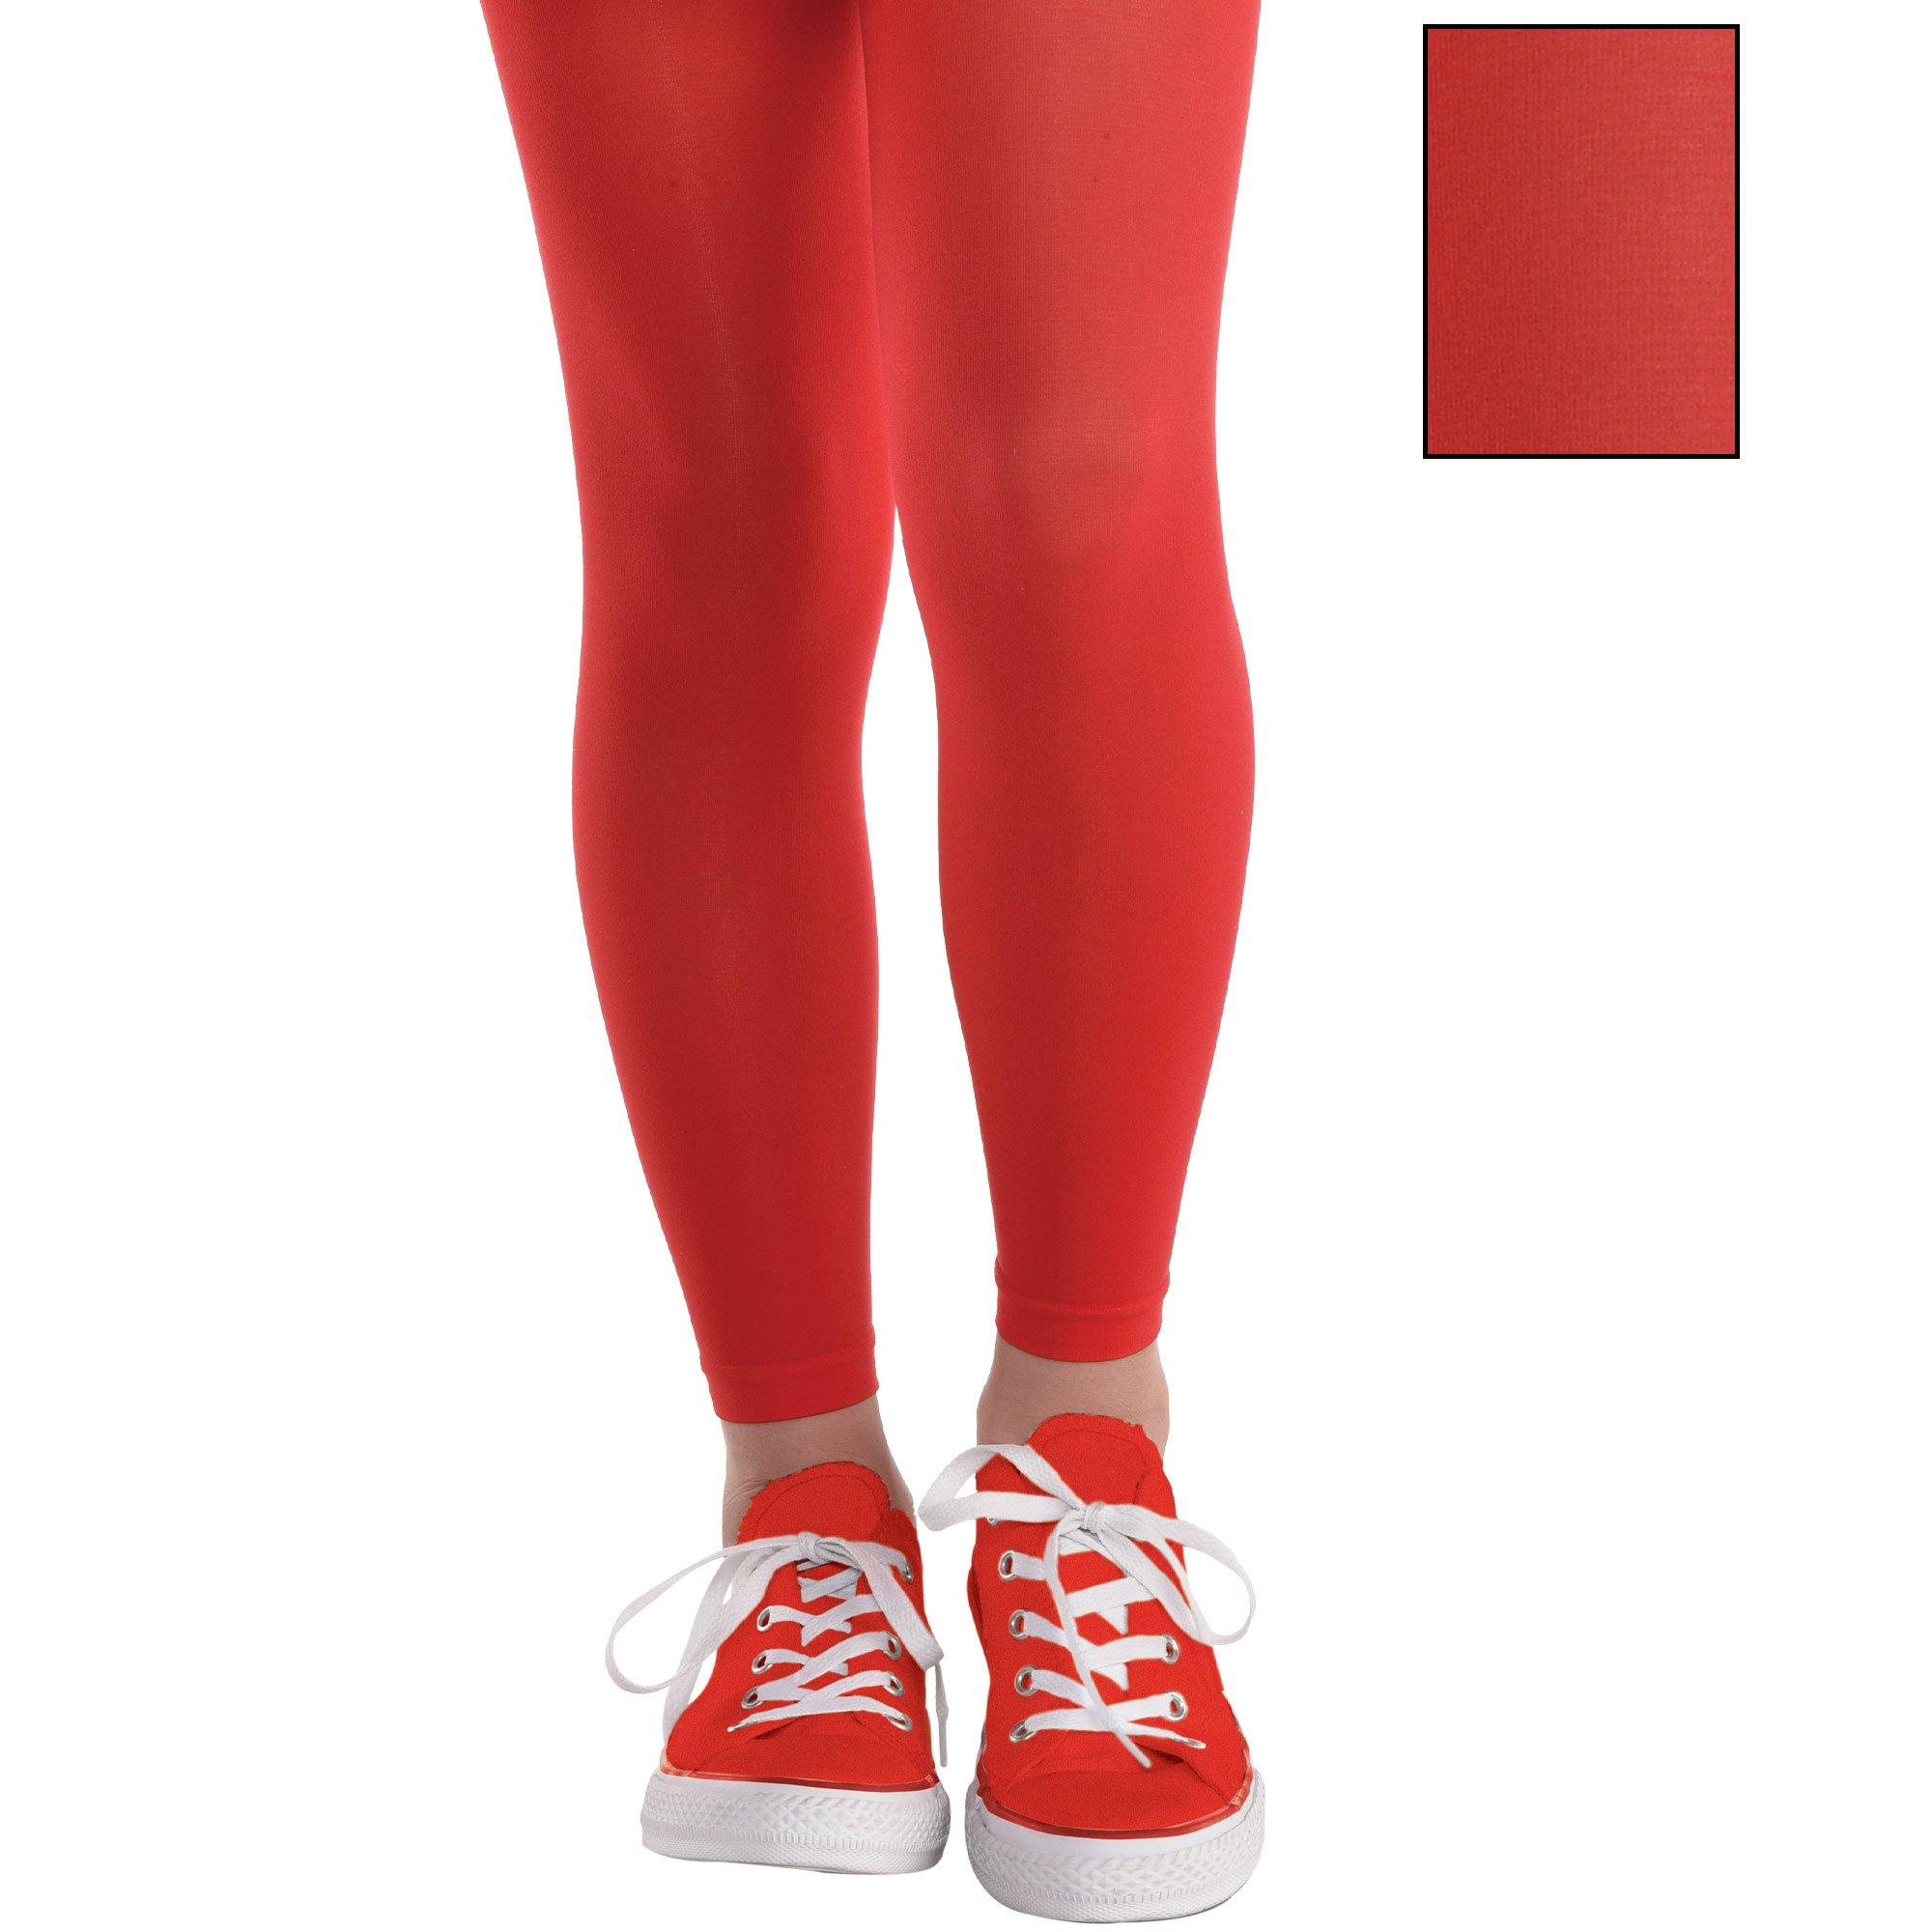 Vivian's Fashions Capri Leggings - Girls, Cotton (Red, Small